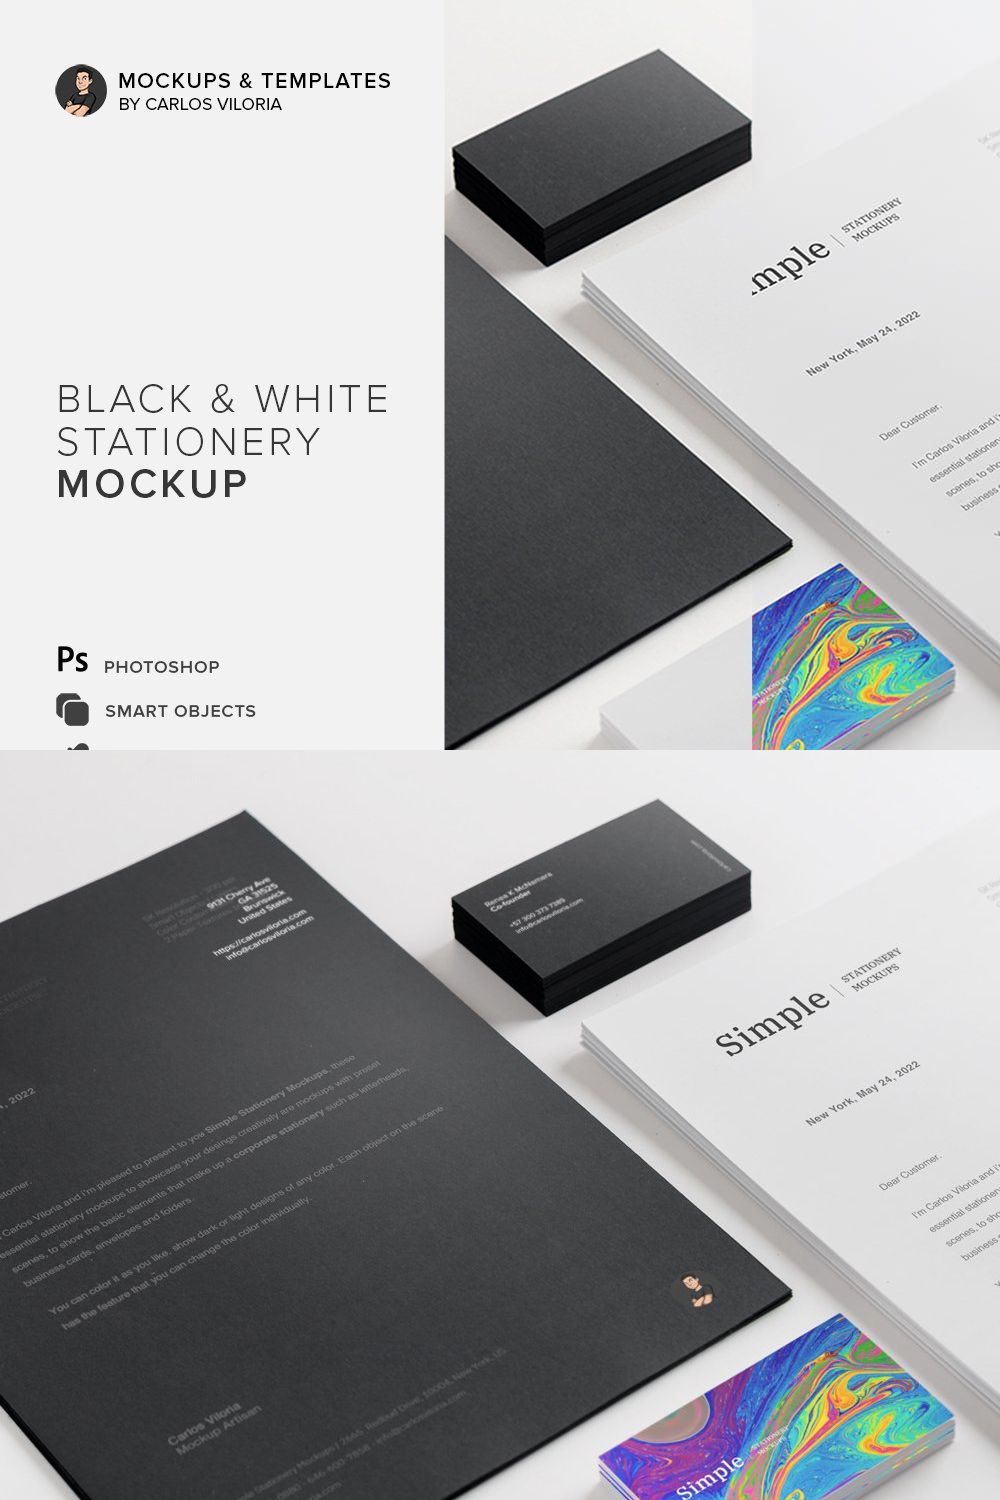 Black & White Stationery Mockup 01 pinterest preview image.